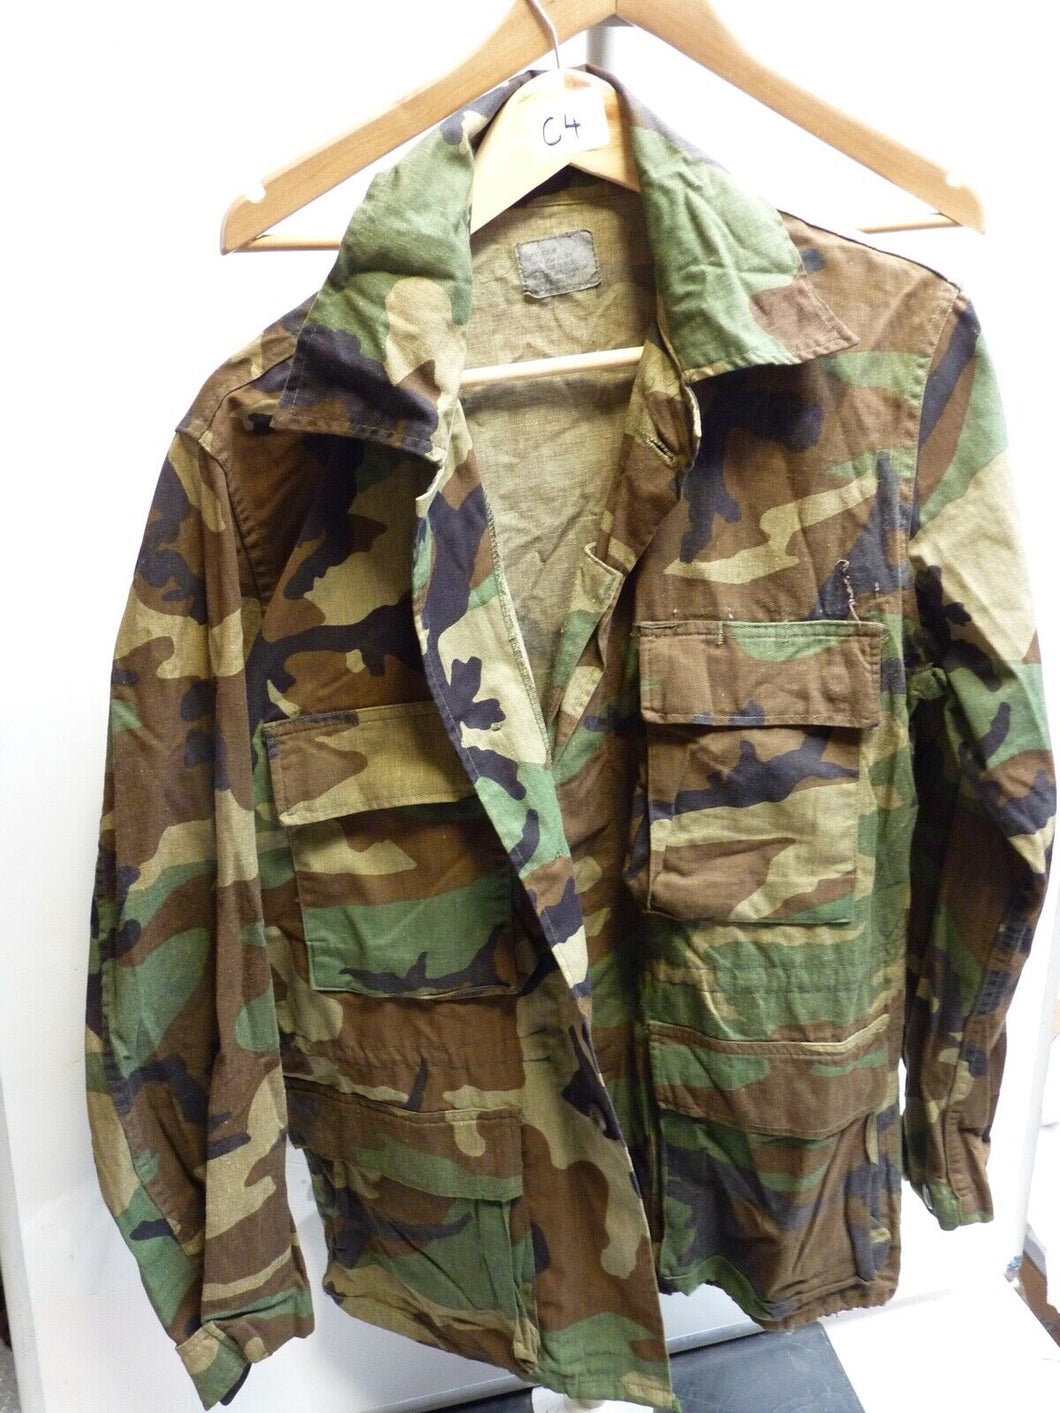 Genuine US Army Camouflaged BDU Battledress Uniform - Max 37 Inch Chest